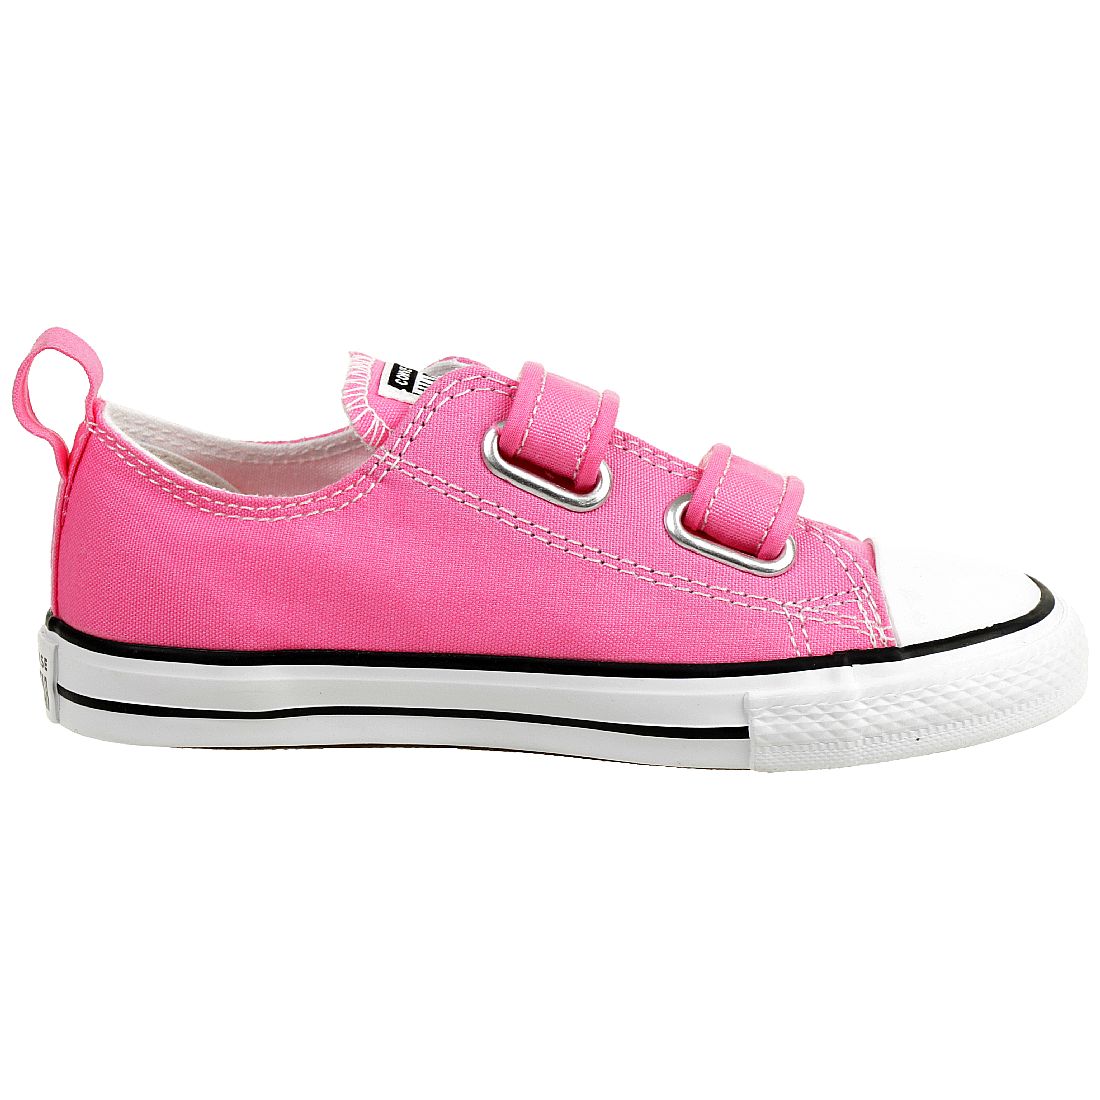 Converse CT 2V OX Chucks Pink Mädchen Baby Sneaker Klett canvas pink 709447C